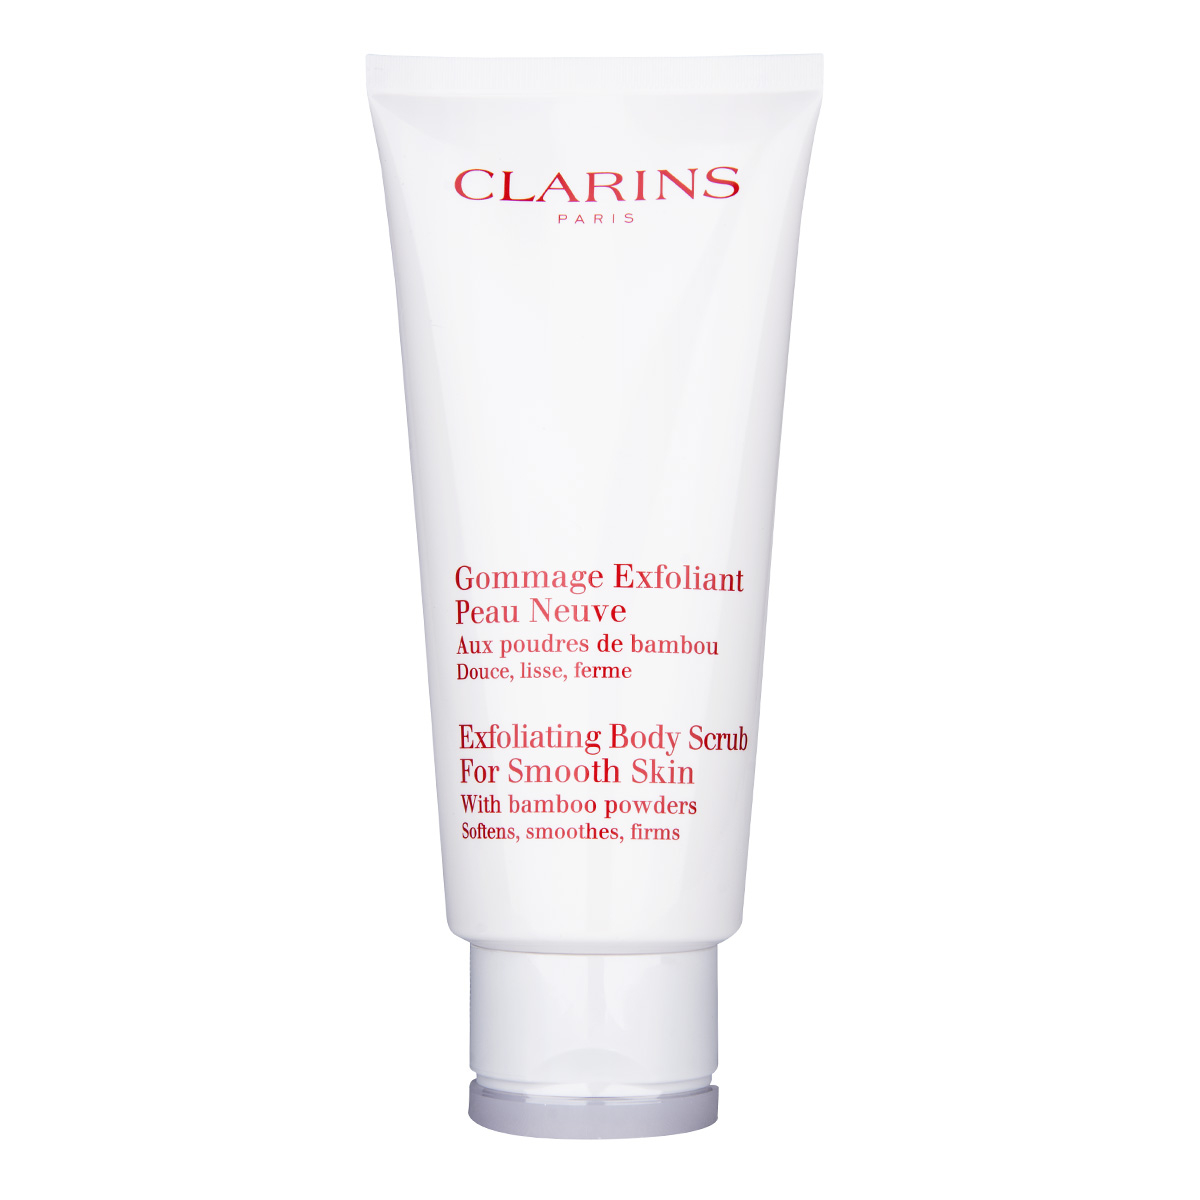 Clarins Exfoliating Body Scrub For Smooth Skin With Bamboo Powders